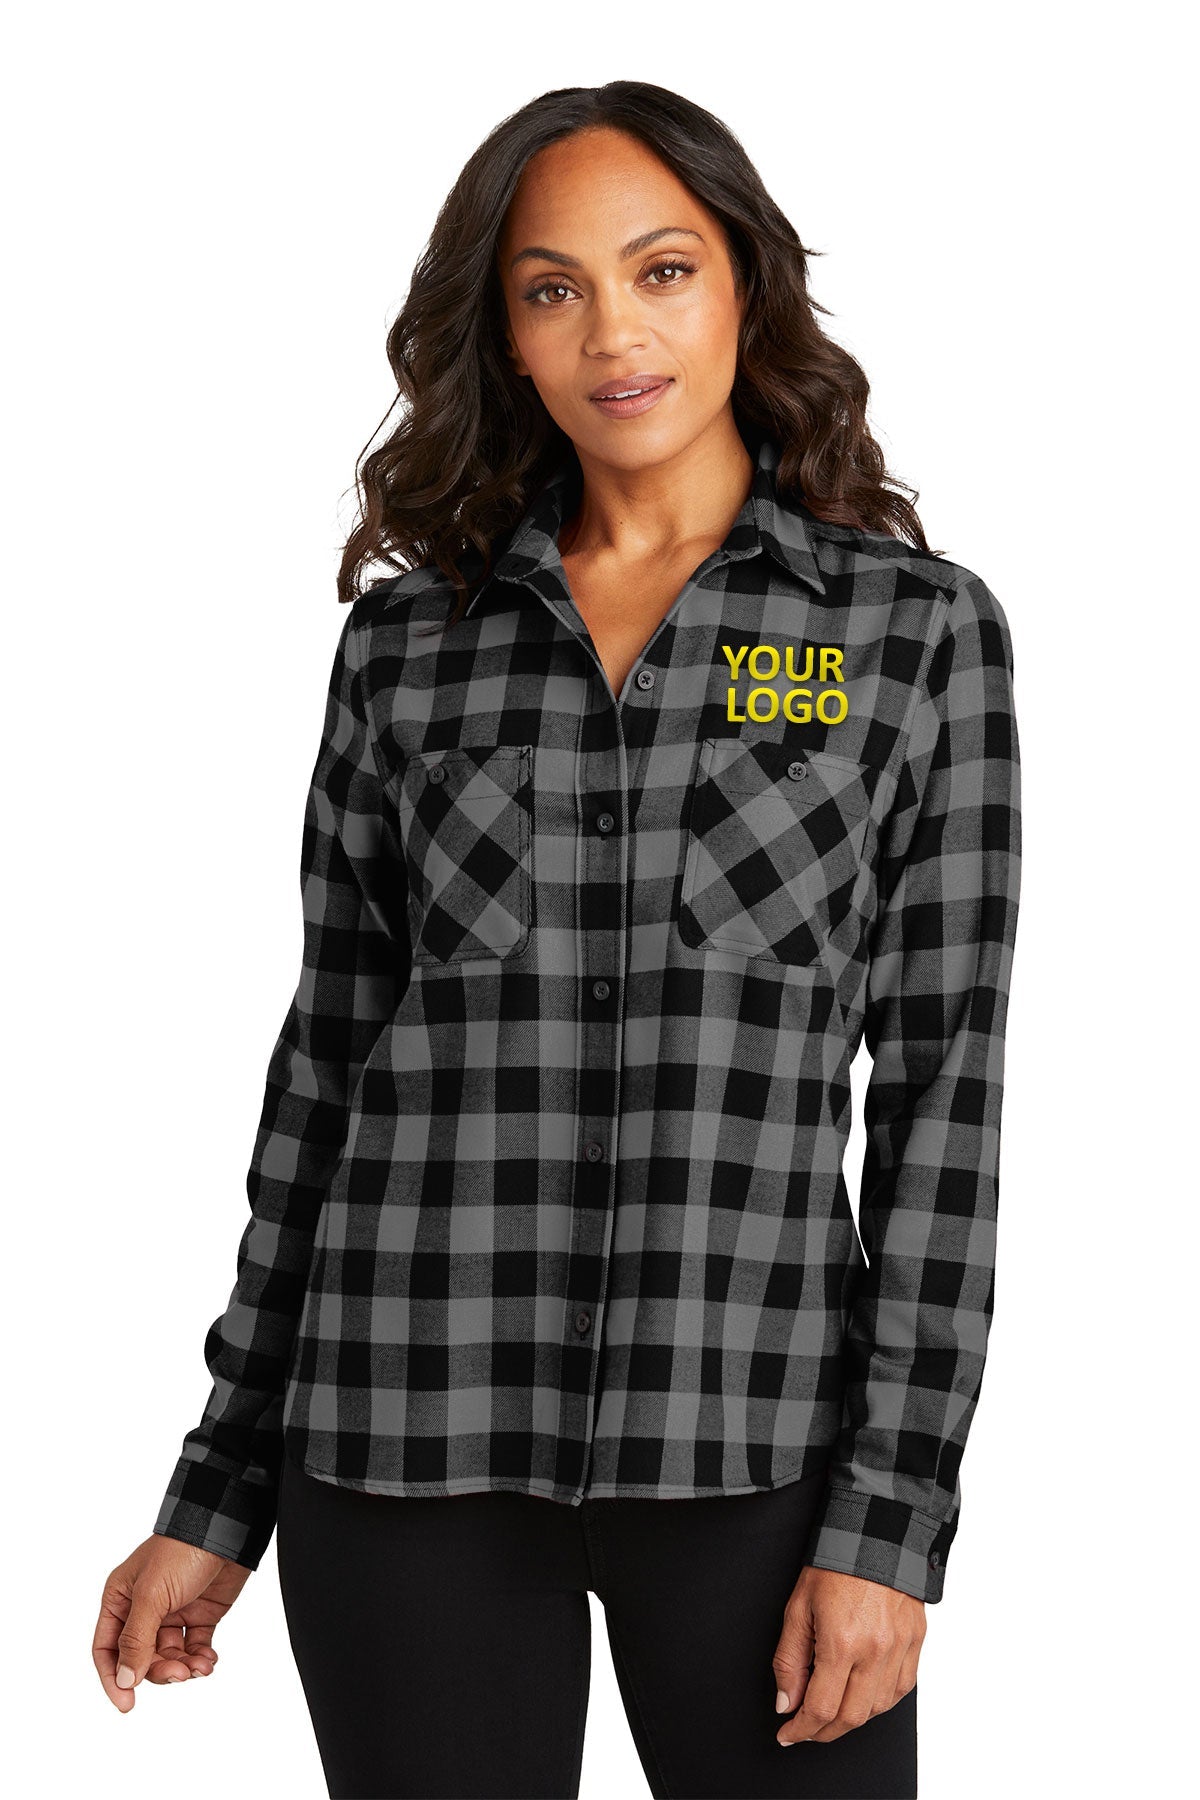 Port Authority Grey/ Black Buffalo Check LW669 custom embroidered shirts